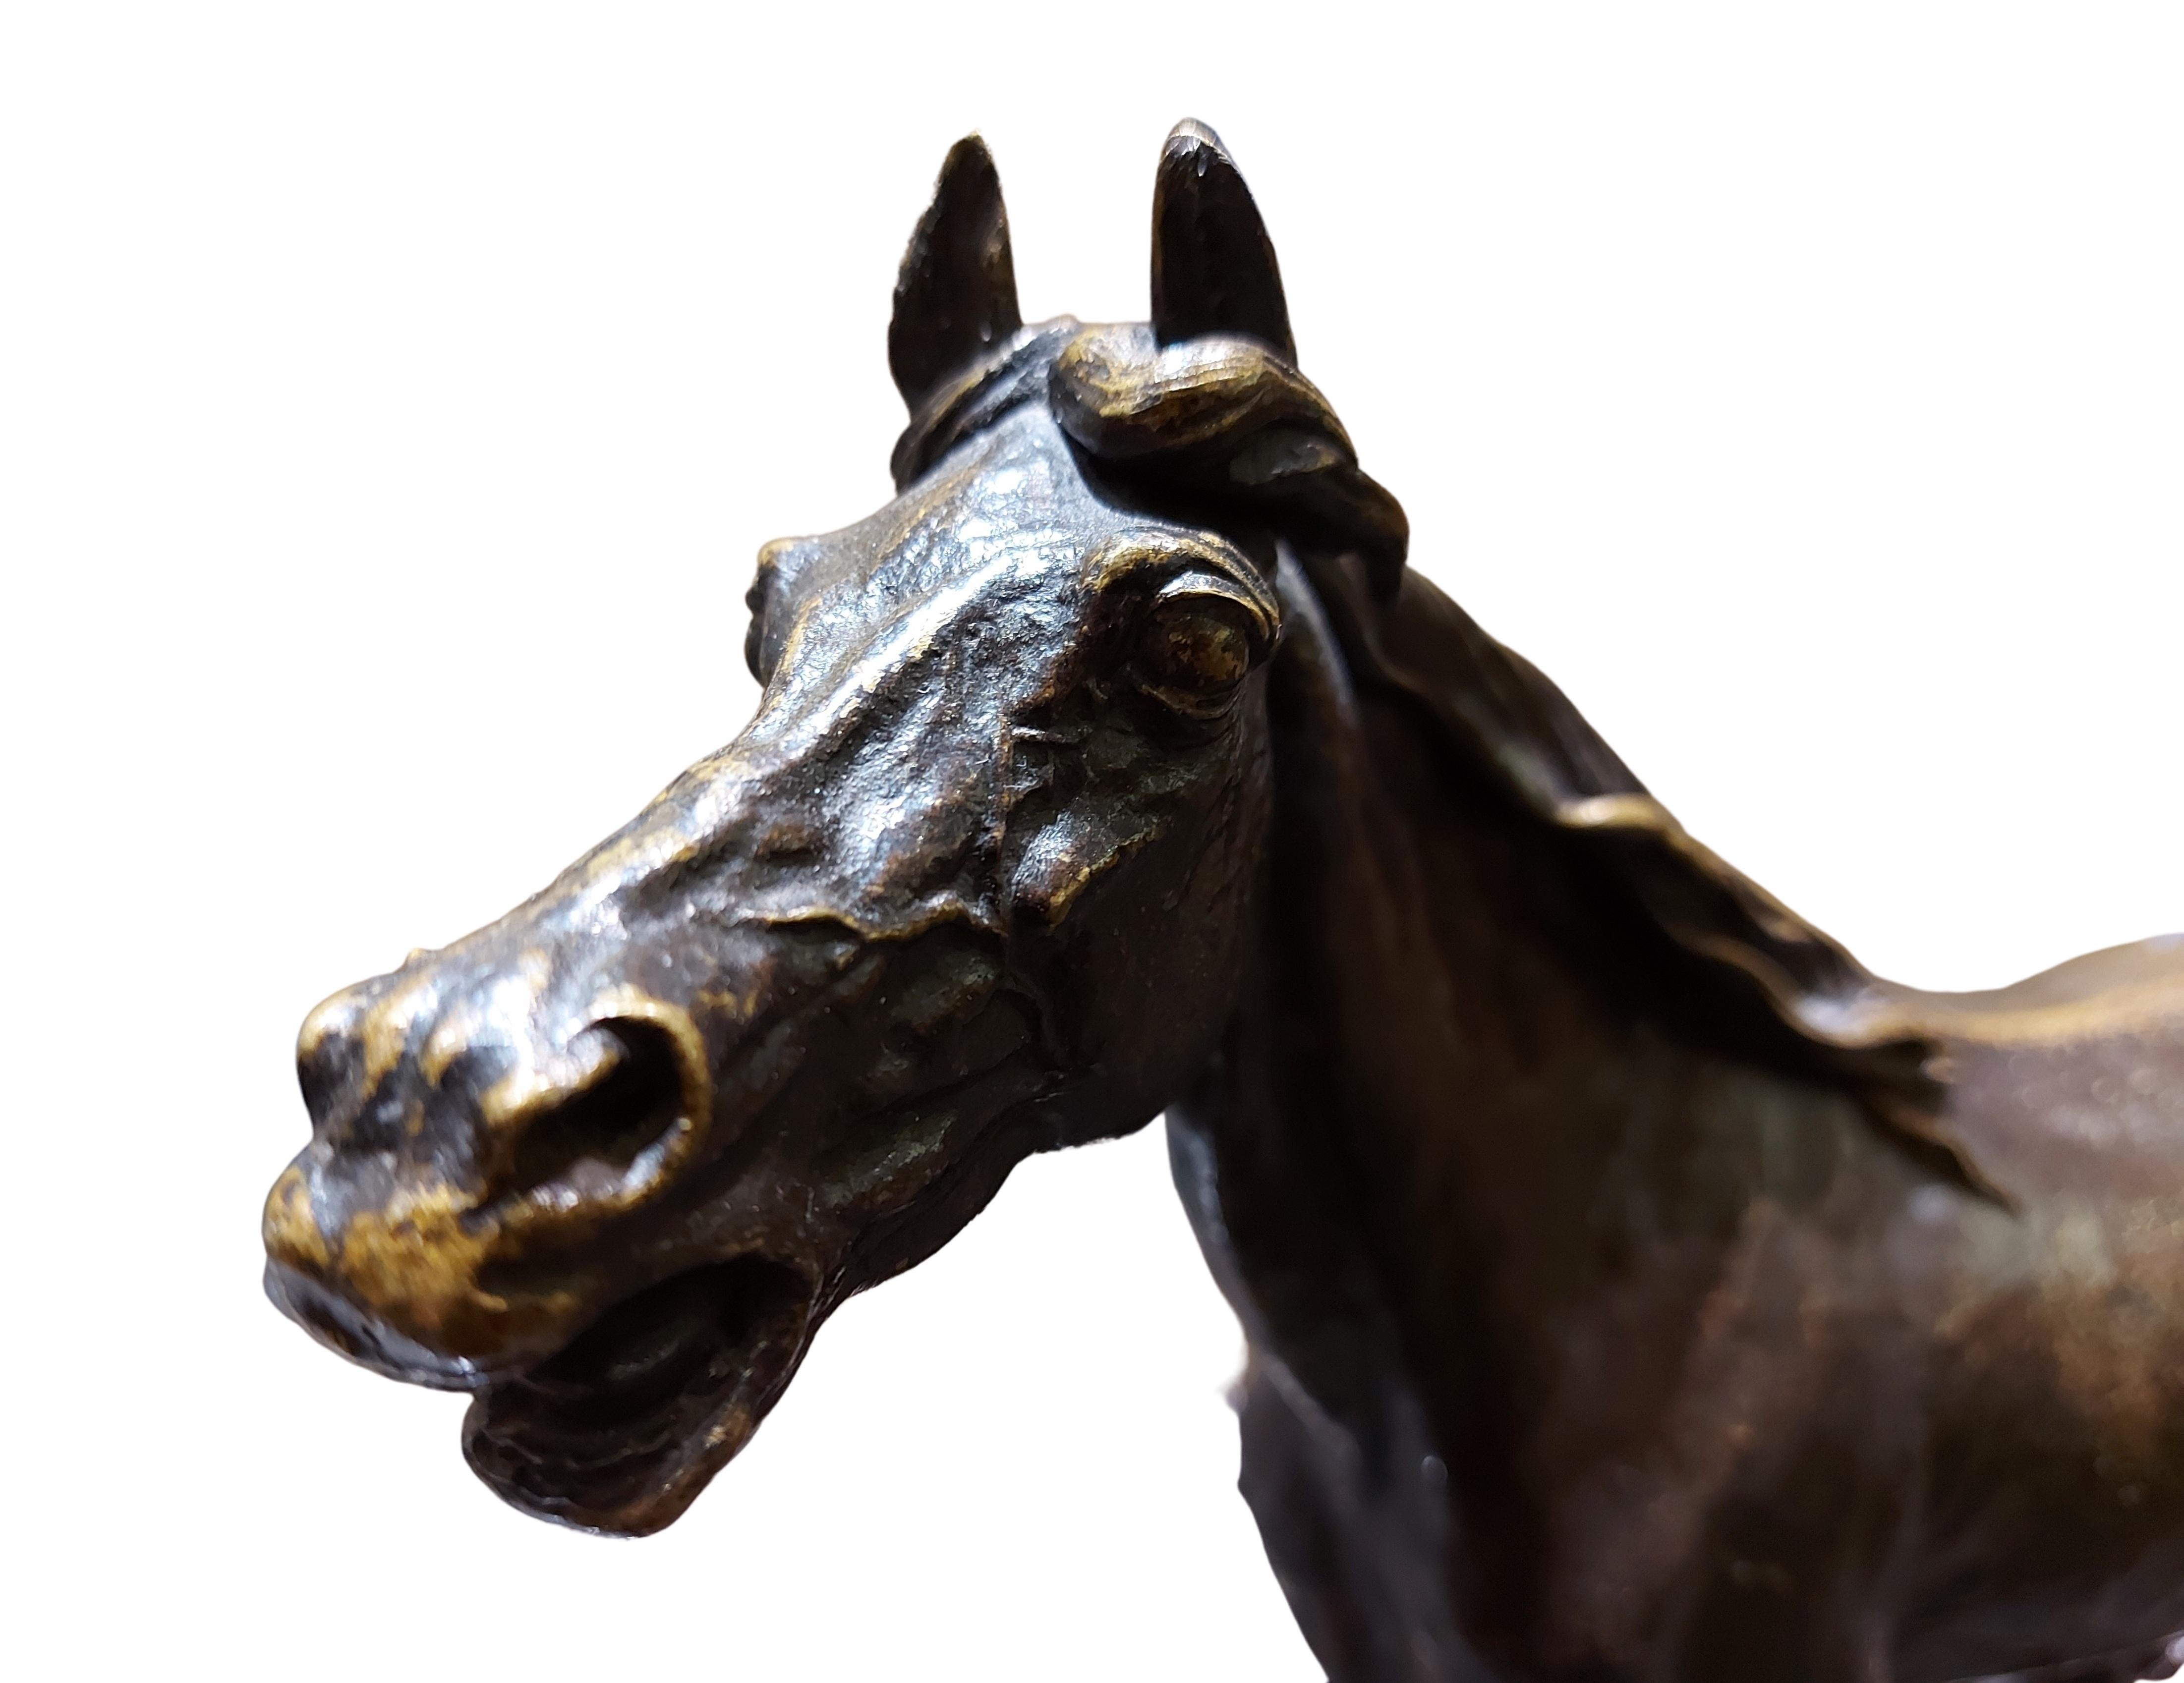 p j mene bronze horse statue